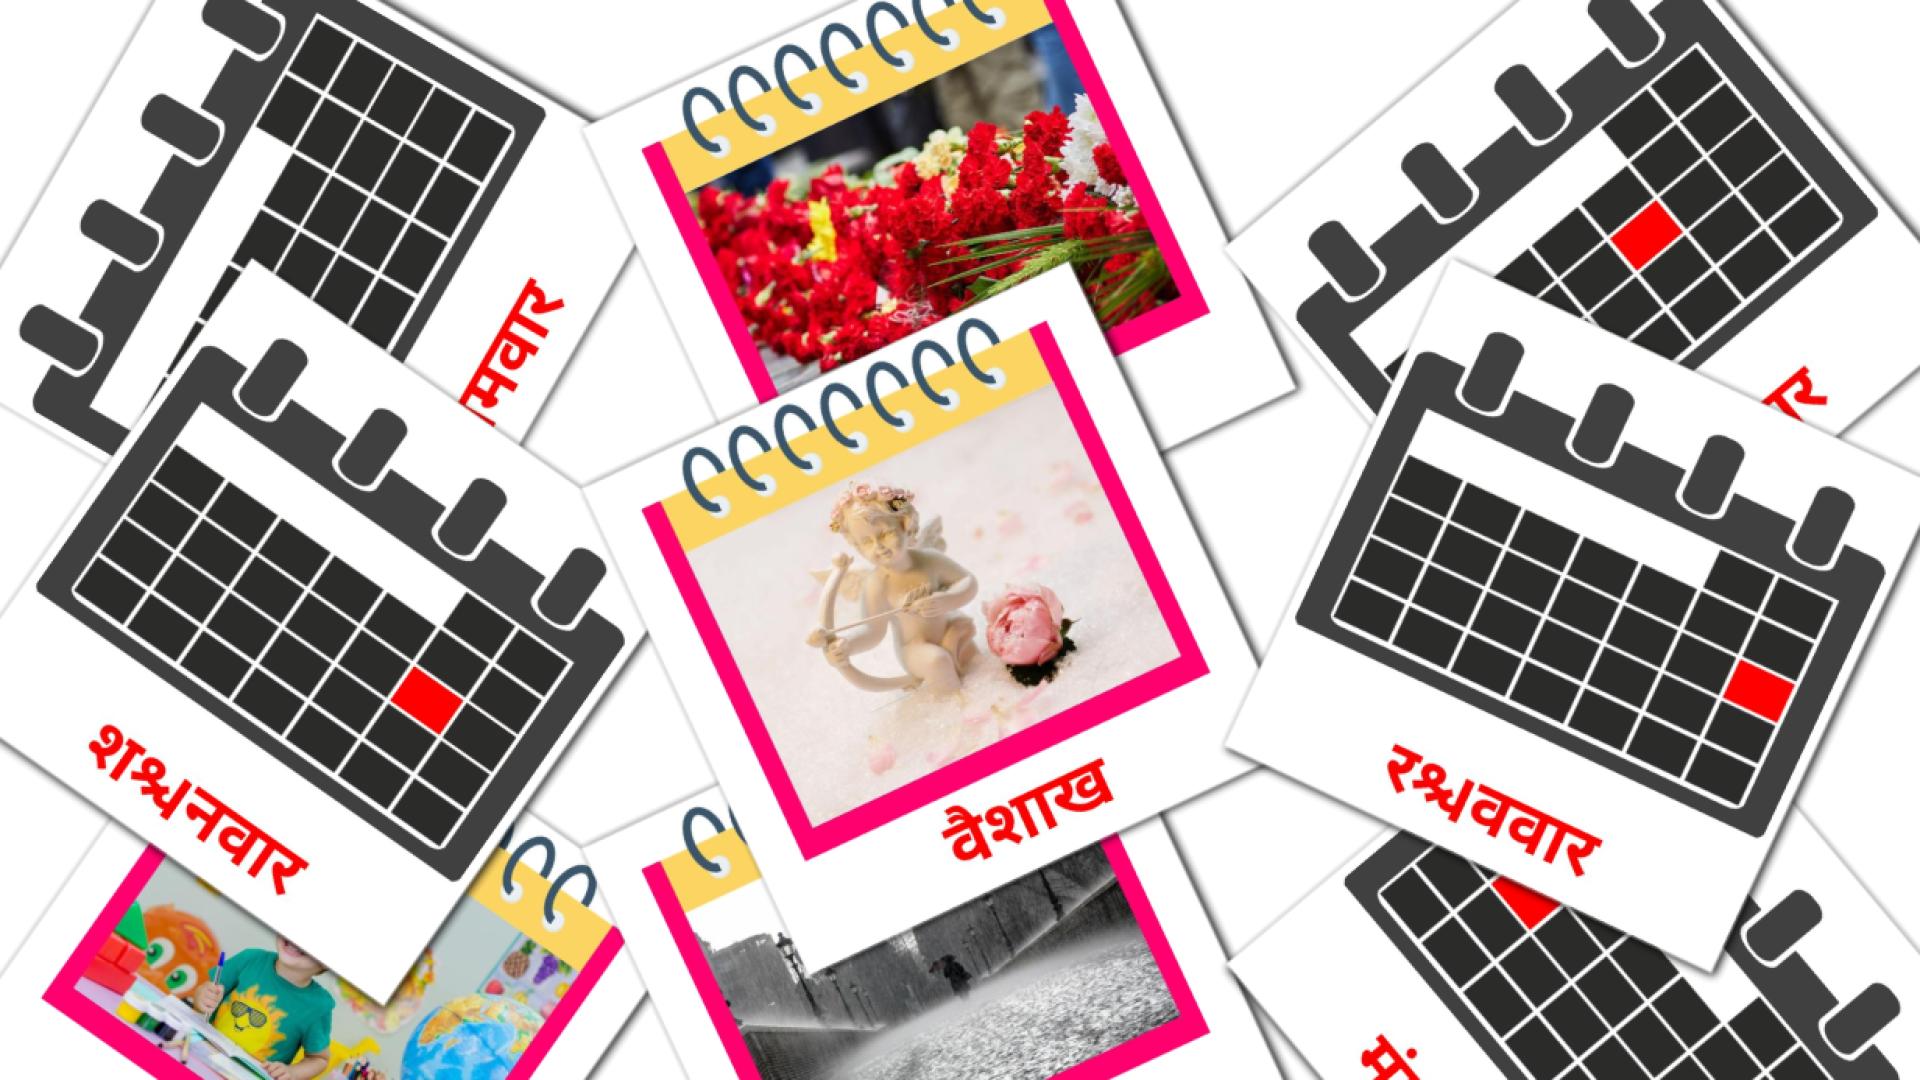  पंचांग hindi vocabulary flashcards